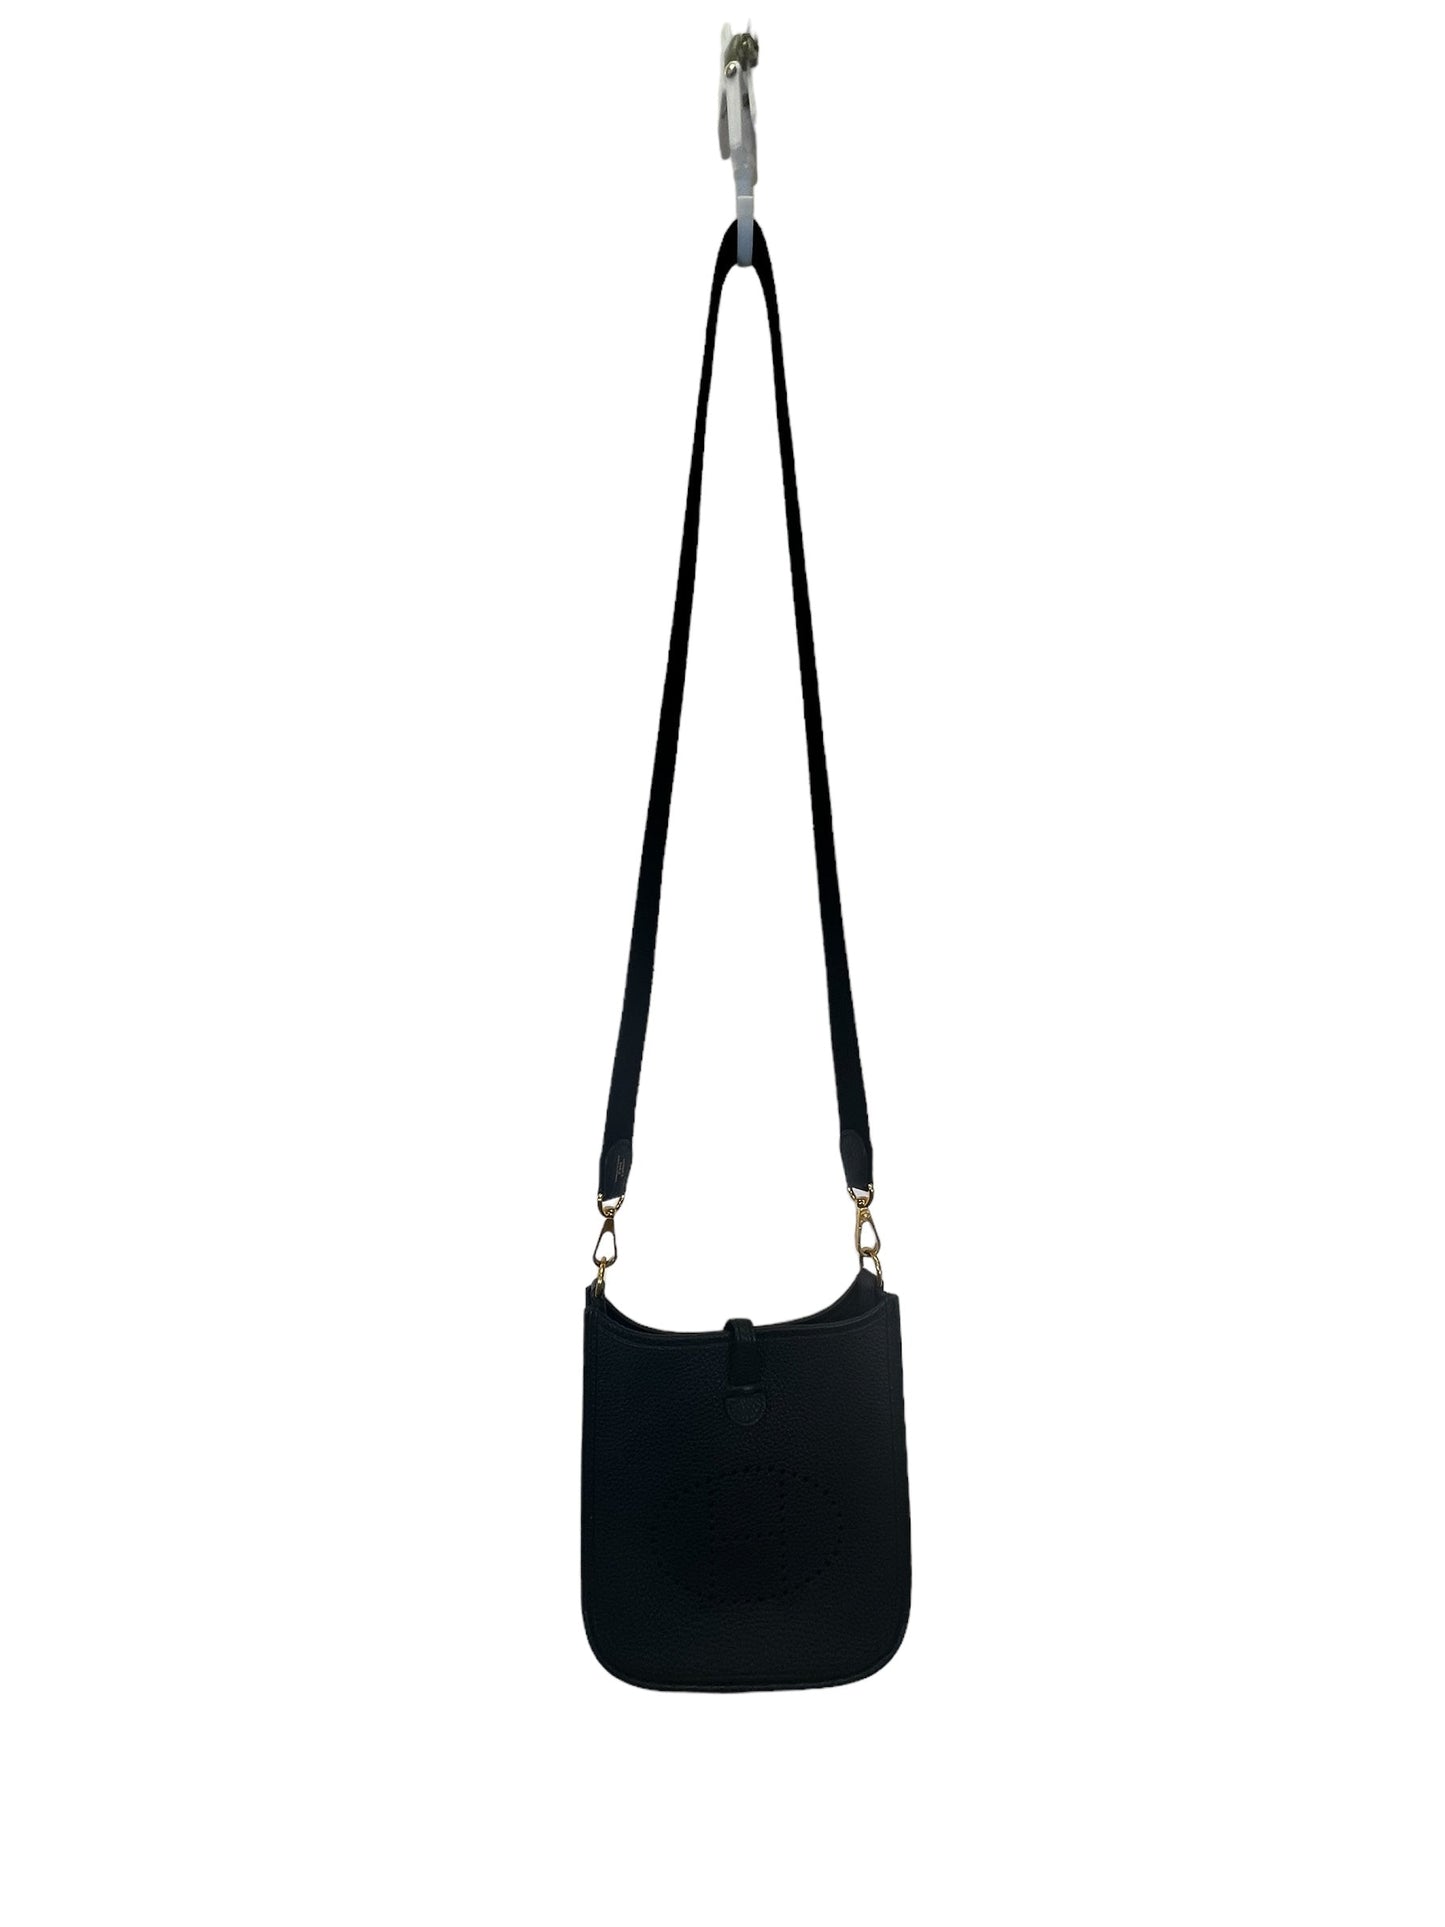 Handbag Luxury Designer By Hermes  Size: Small